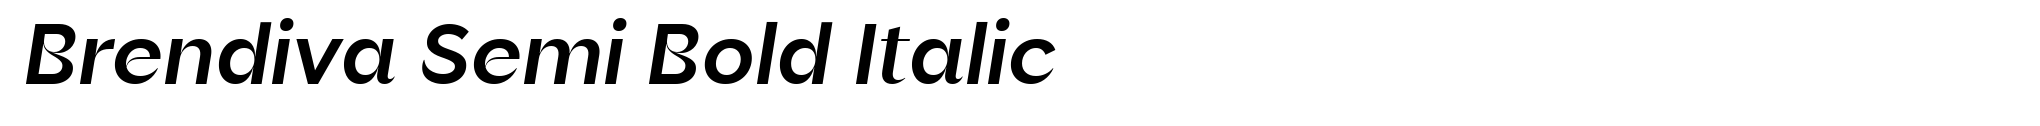 Brendiva Semi Bold Italic image